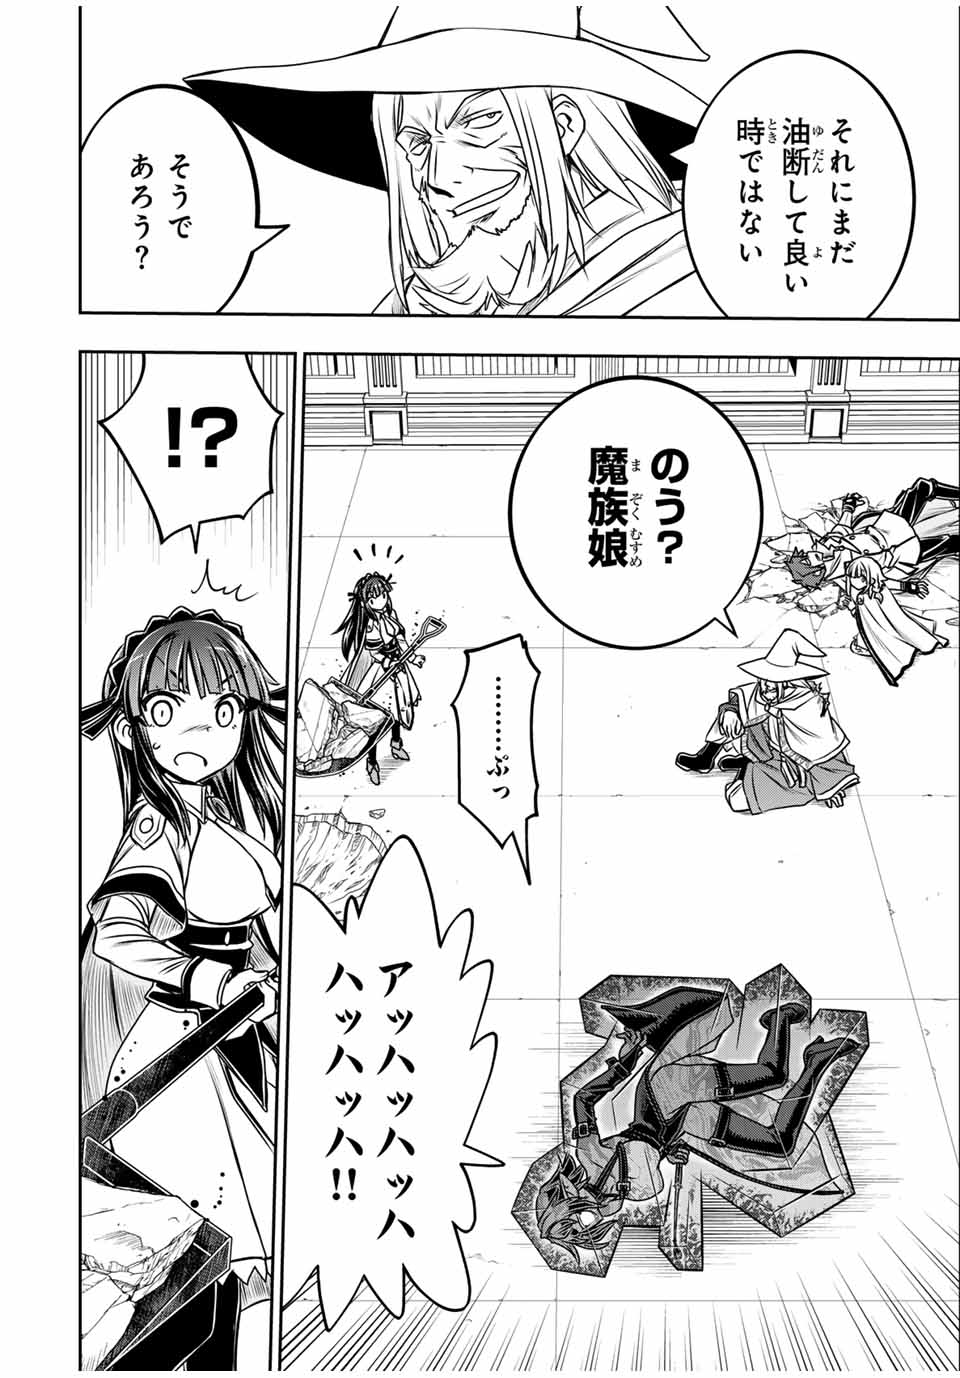 Nengan no Akuyaku Reijou (Last Boss) no Karada wo Teniiretazo!  - Chapter 26 - Page 8